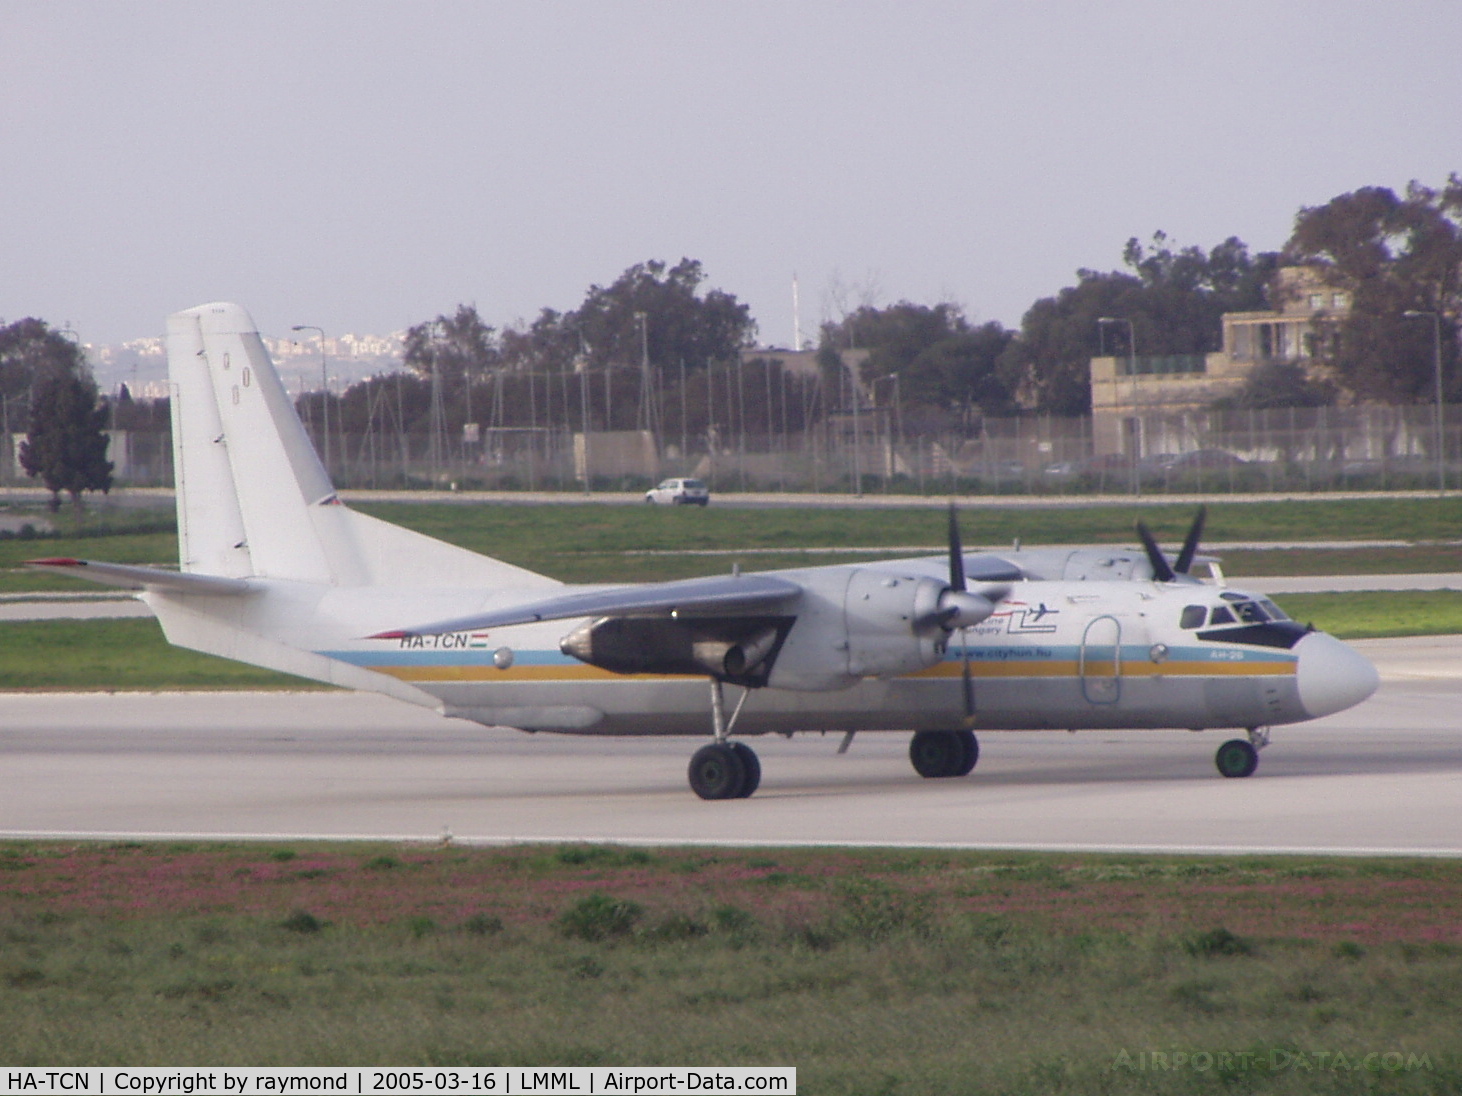 HA-TCN, 1977 Antonov An-26 C/N 97307705, An26 HA-TCN of Aviaexpress seen after landing. Aircraft stayed overnight.